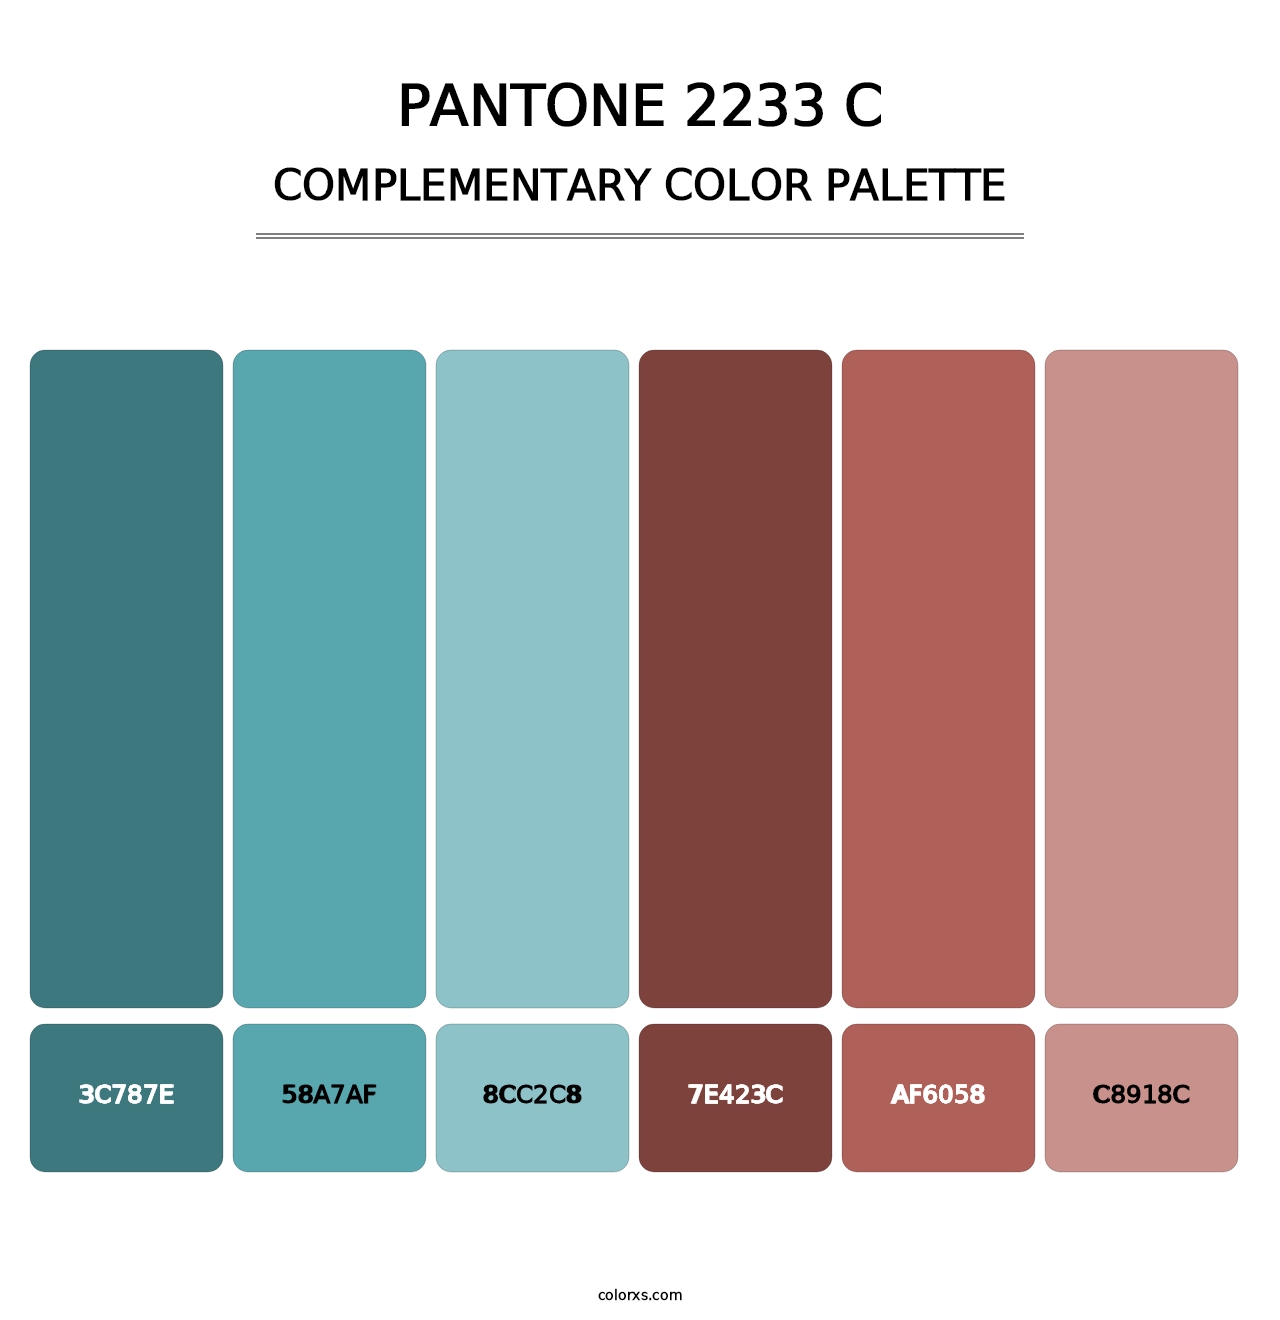 PANTONE 2233 C - Complementary Color Palette